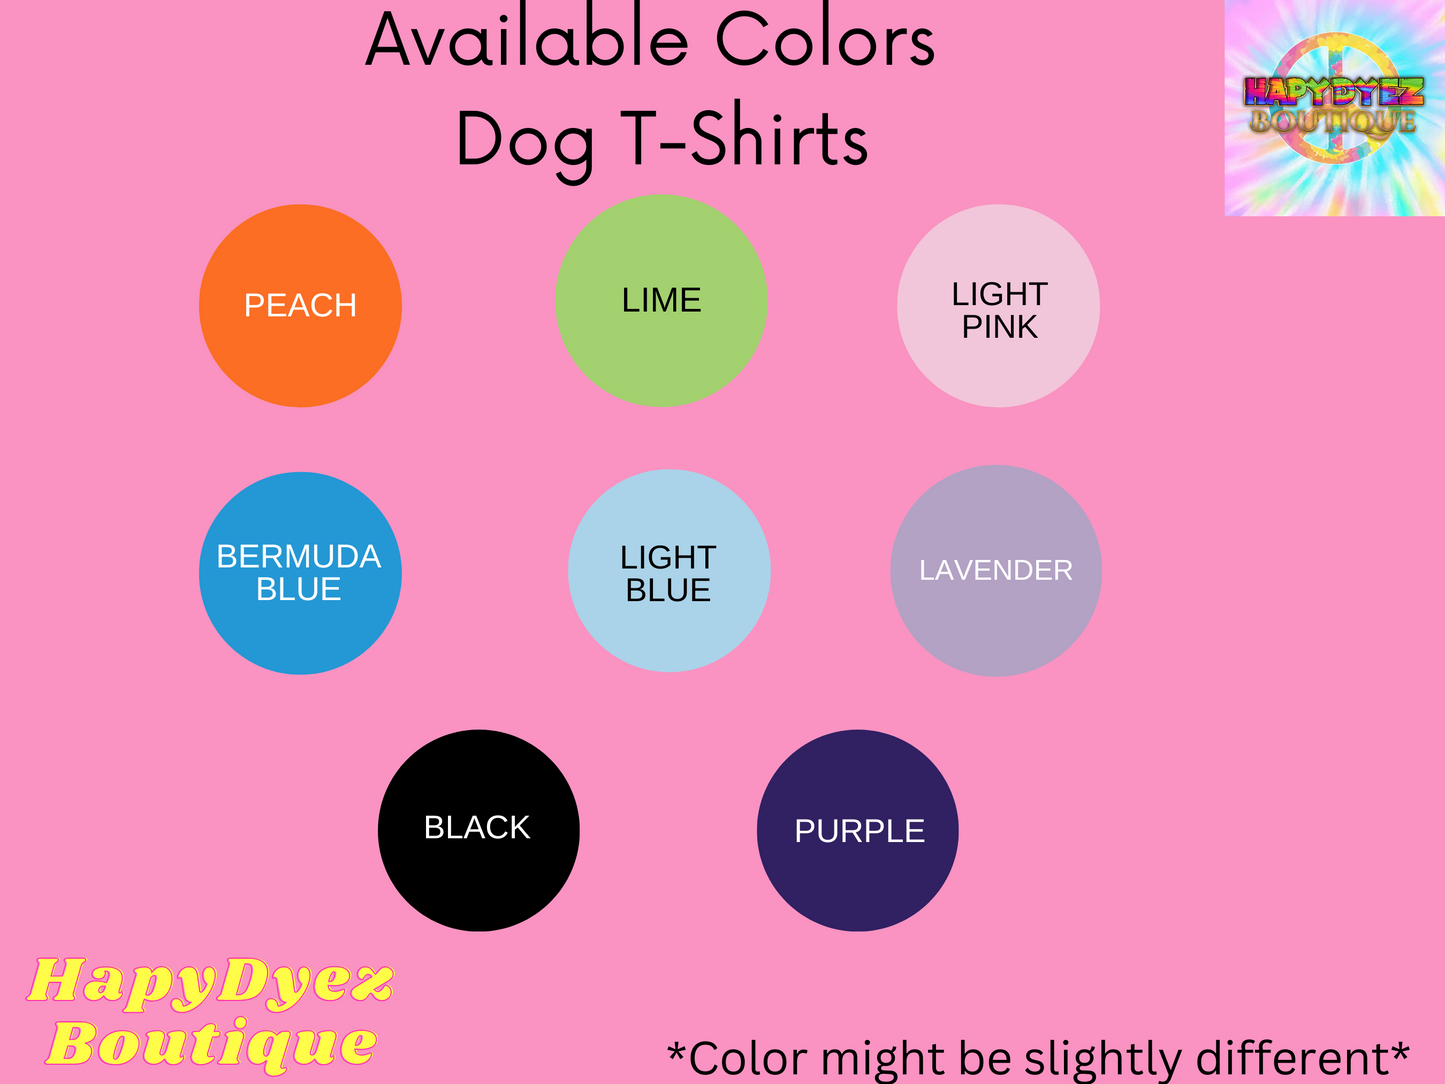 CUSTOM**Cute & Comfy Graphic Dog T-Shirts**